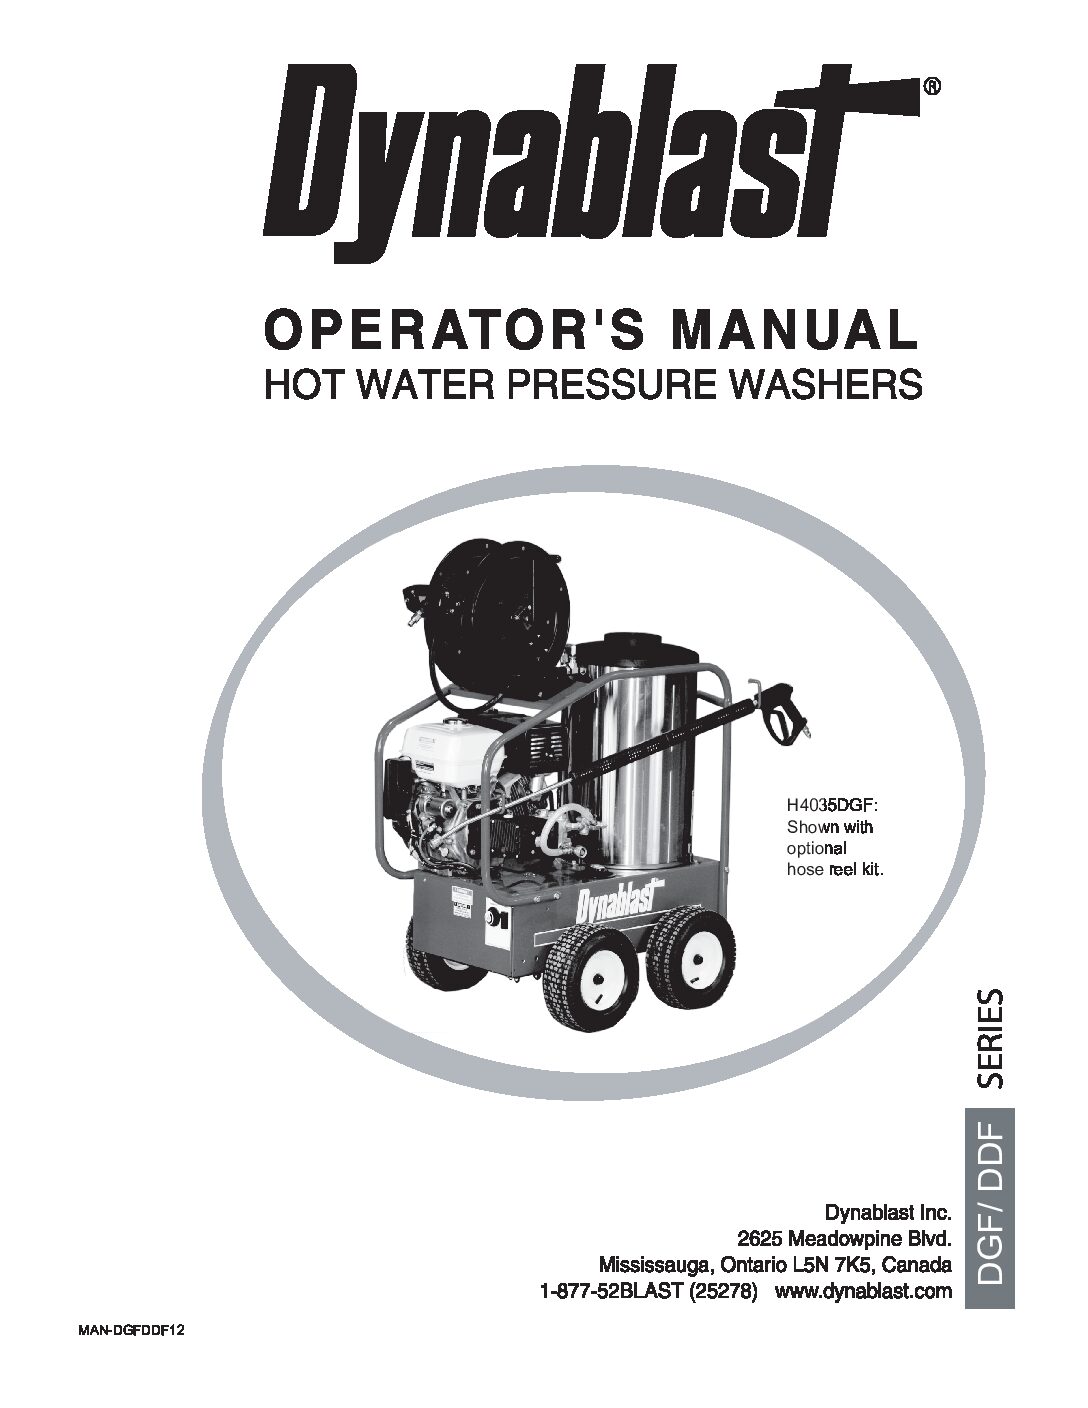 Dynablast HK4035DGF Hot Water Pressure Washer manual English